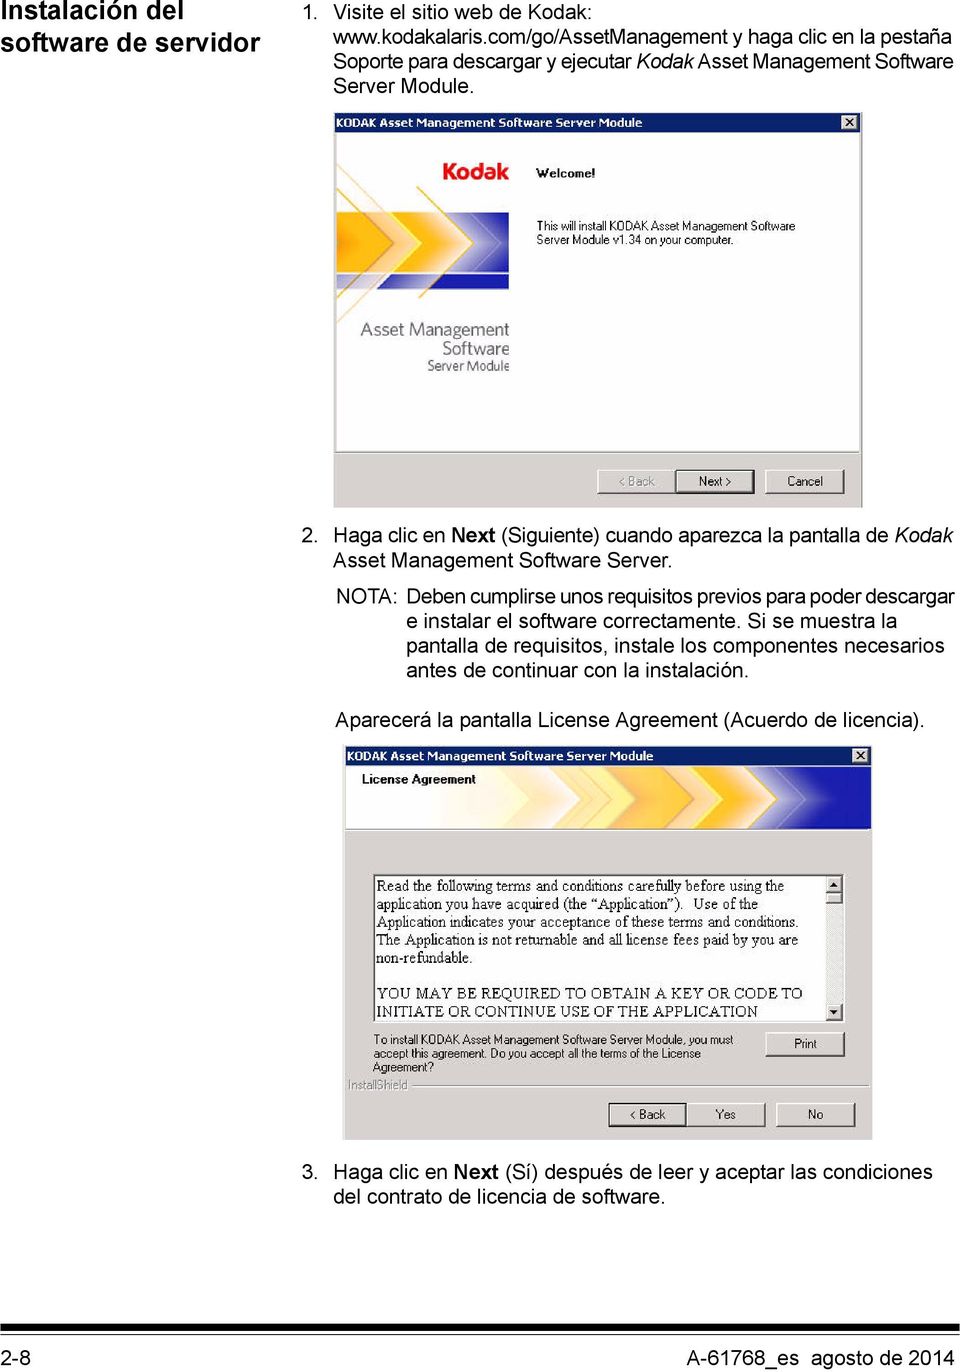 Haga clic en Next (Siguiente) cuando aparezca la pantalla de Kodak Asset Management Software Server.